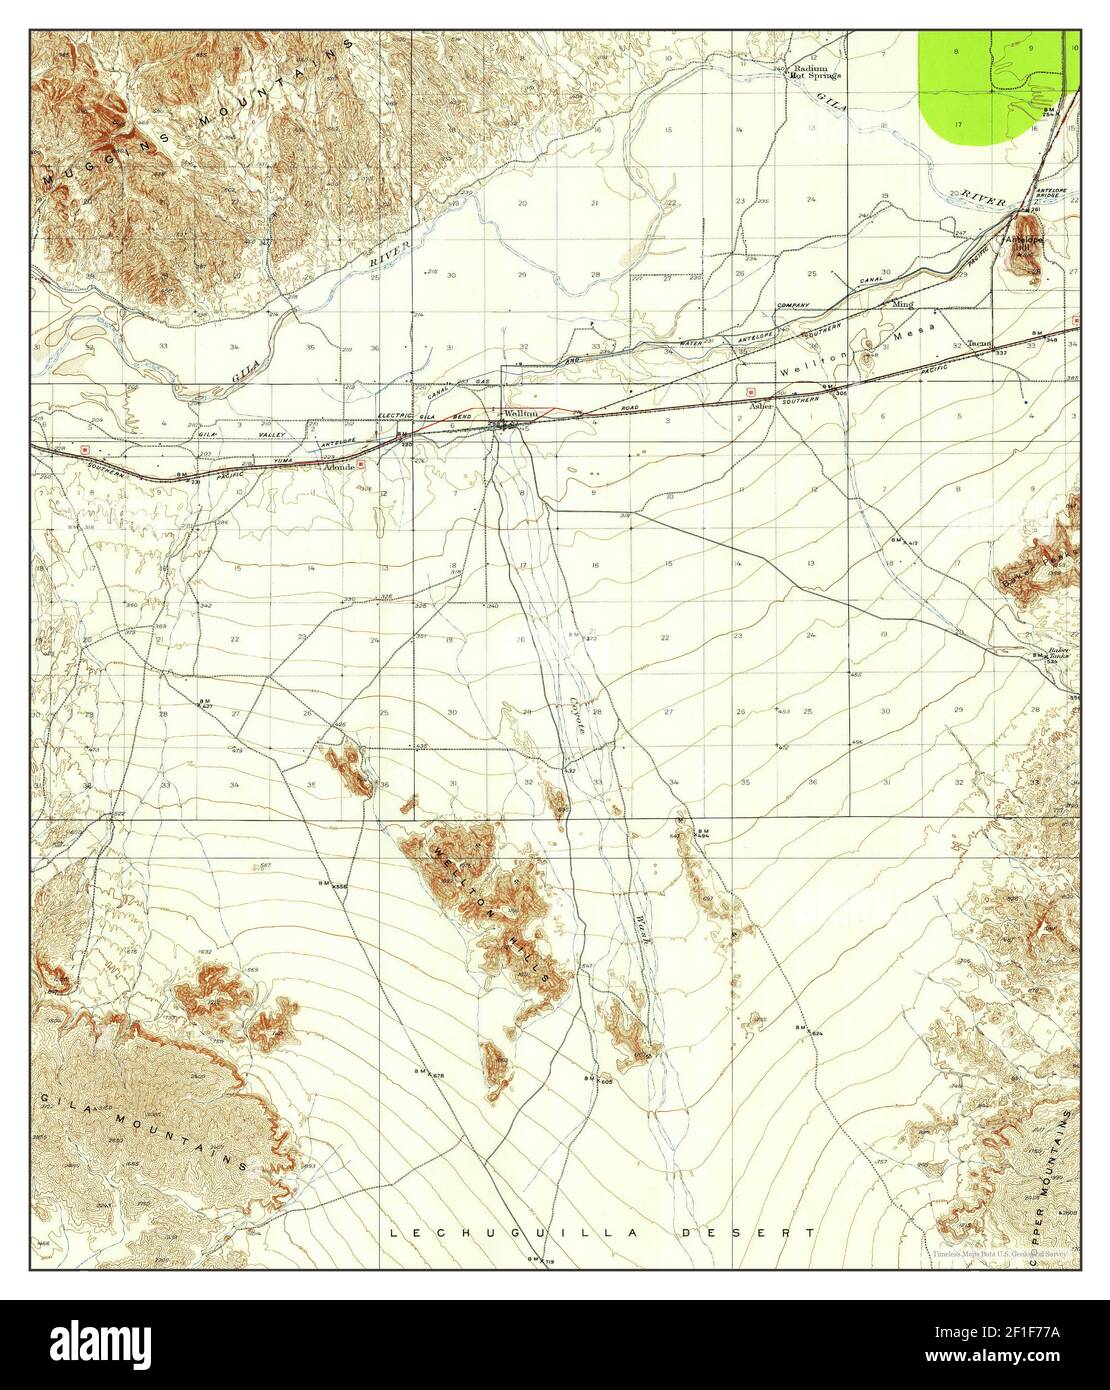 Wellton, Arizona, map 1926, 1:62500, United States of America by Timeless Maps, data U.S. Geological Survey Stock Photo